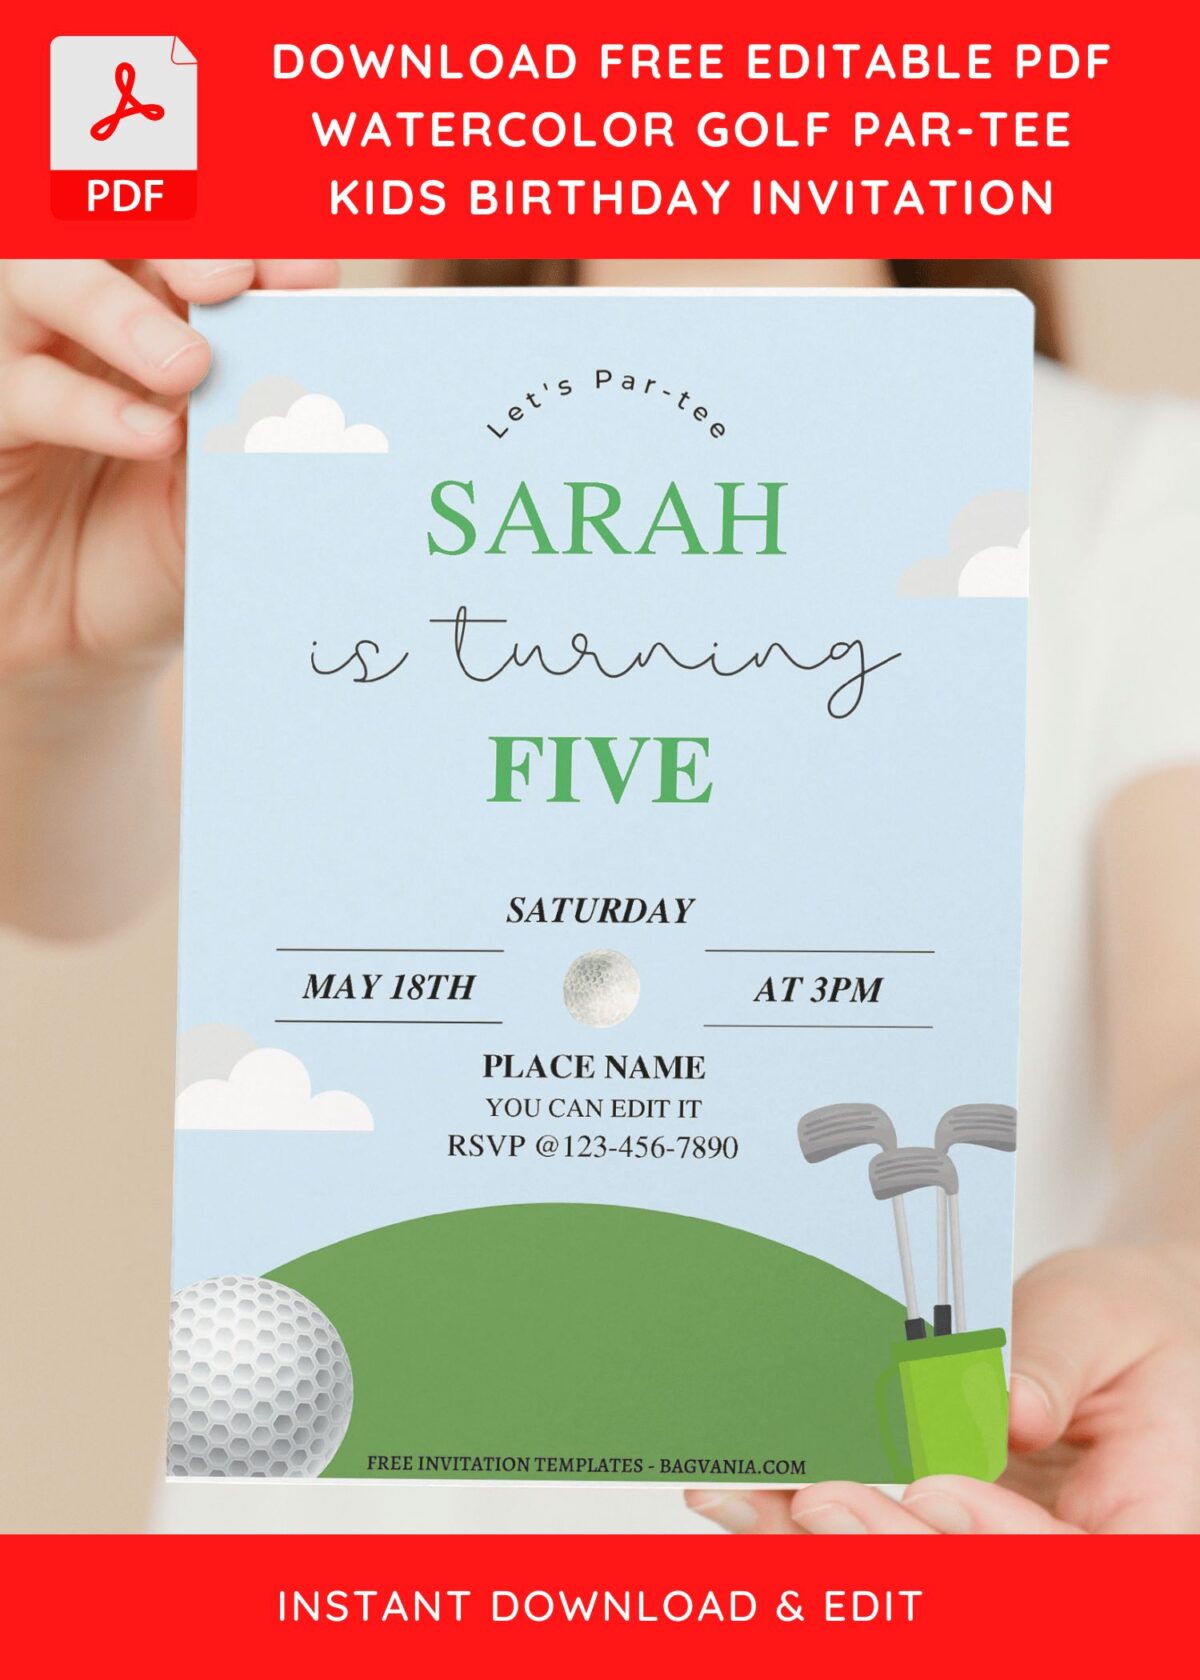 (Free Editable PDF) Playful Golf Par-Tee Kids Birthday Invitation Templates I